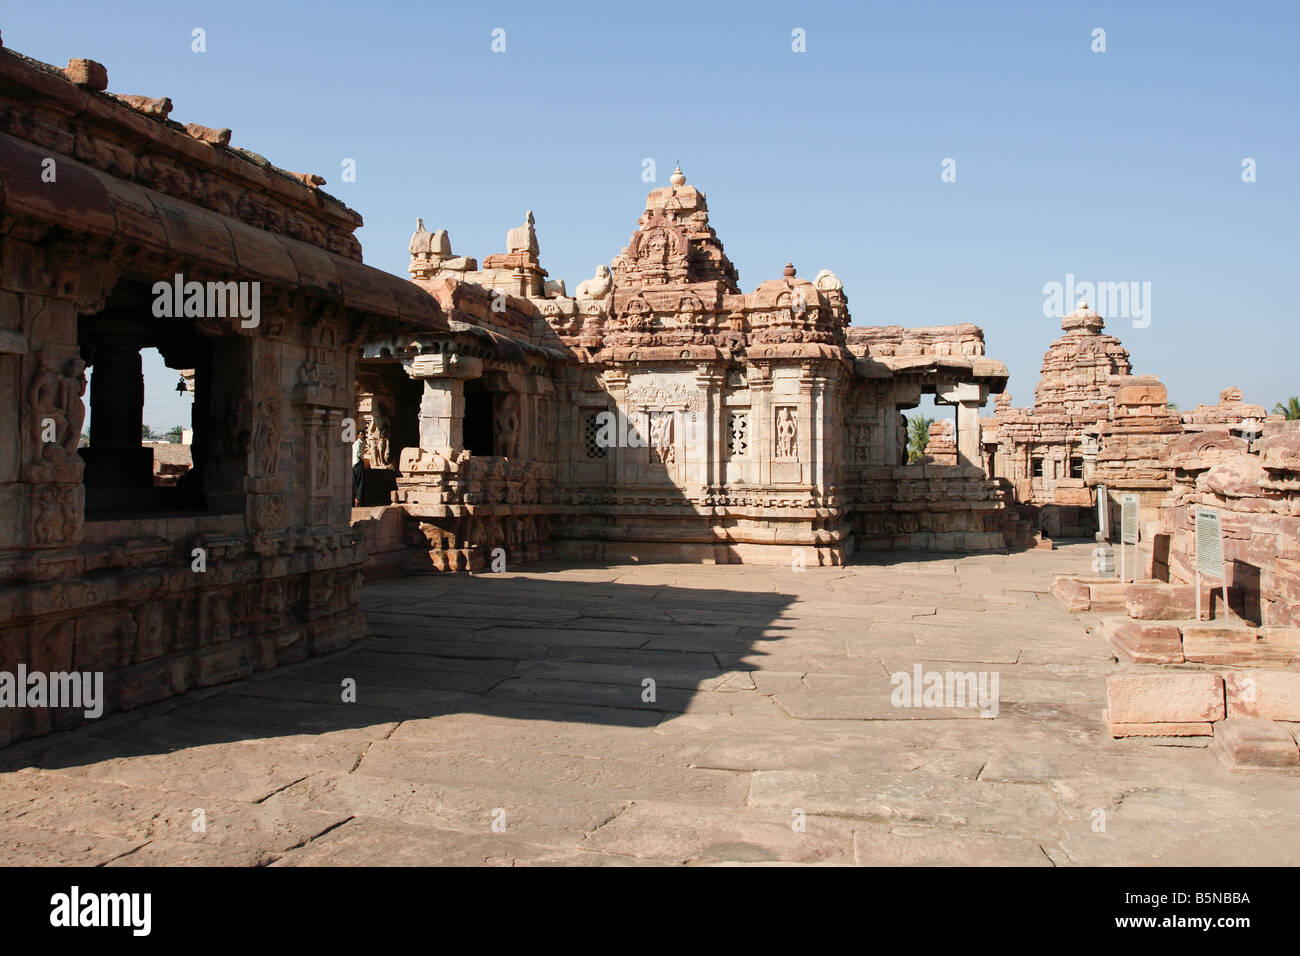 Decorated ancient Hindu temple dedicated to Shiva at the ancient site of Pattadakal, Karnataka, India Stock Photo